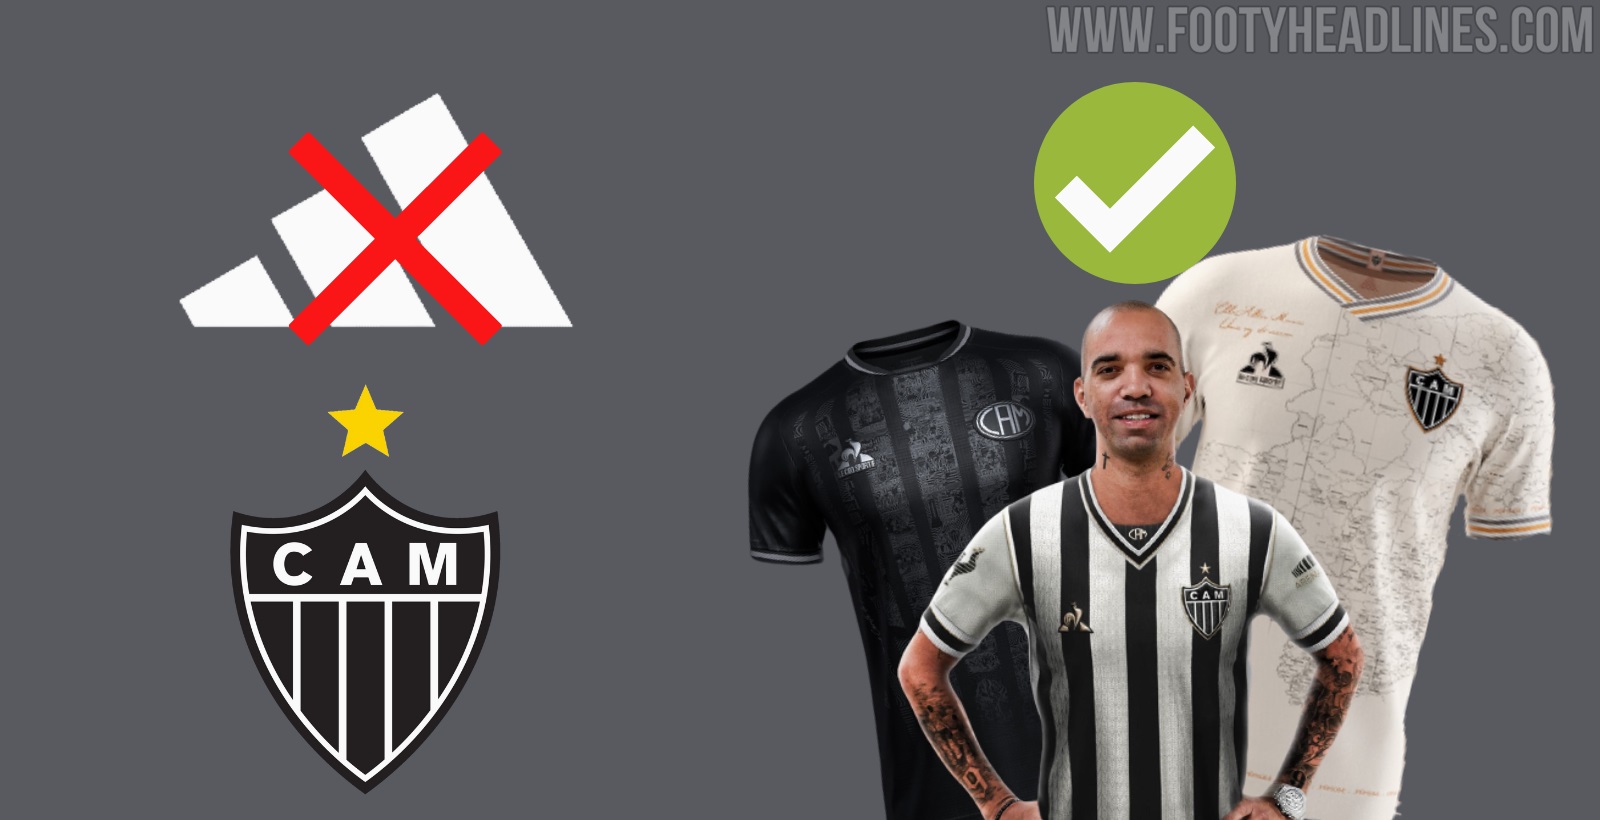 Atlético Mineiro 22-23 Third Kit Released - Footy Headlines